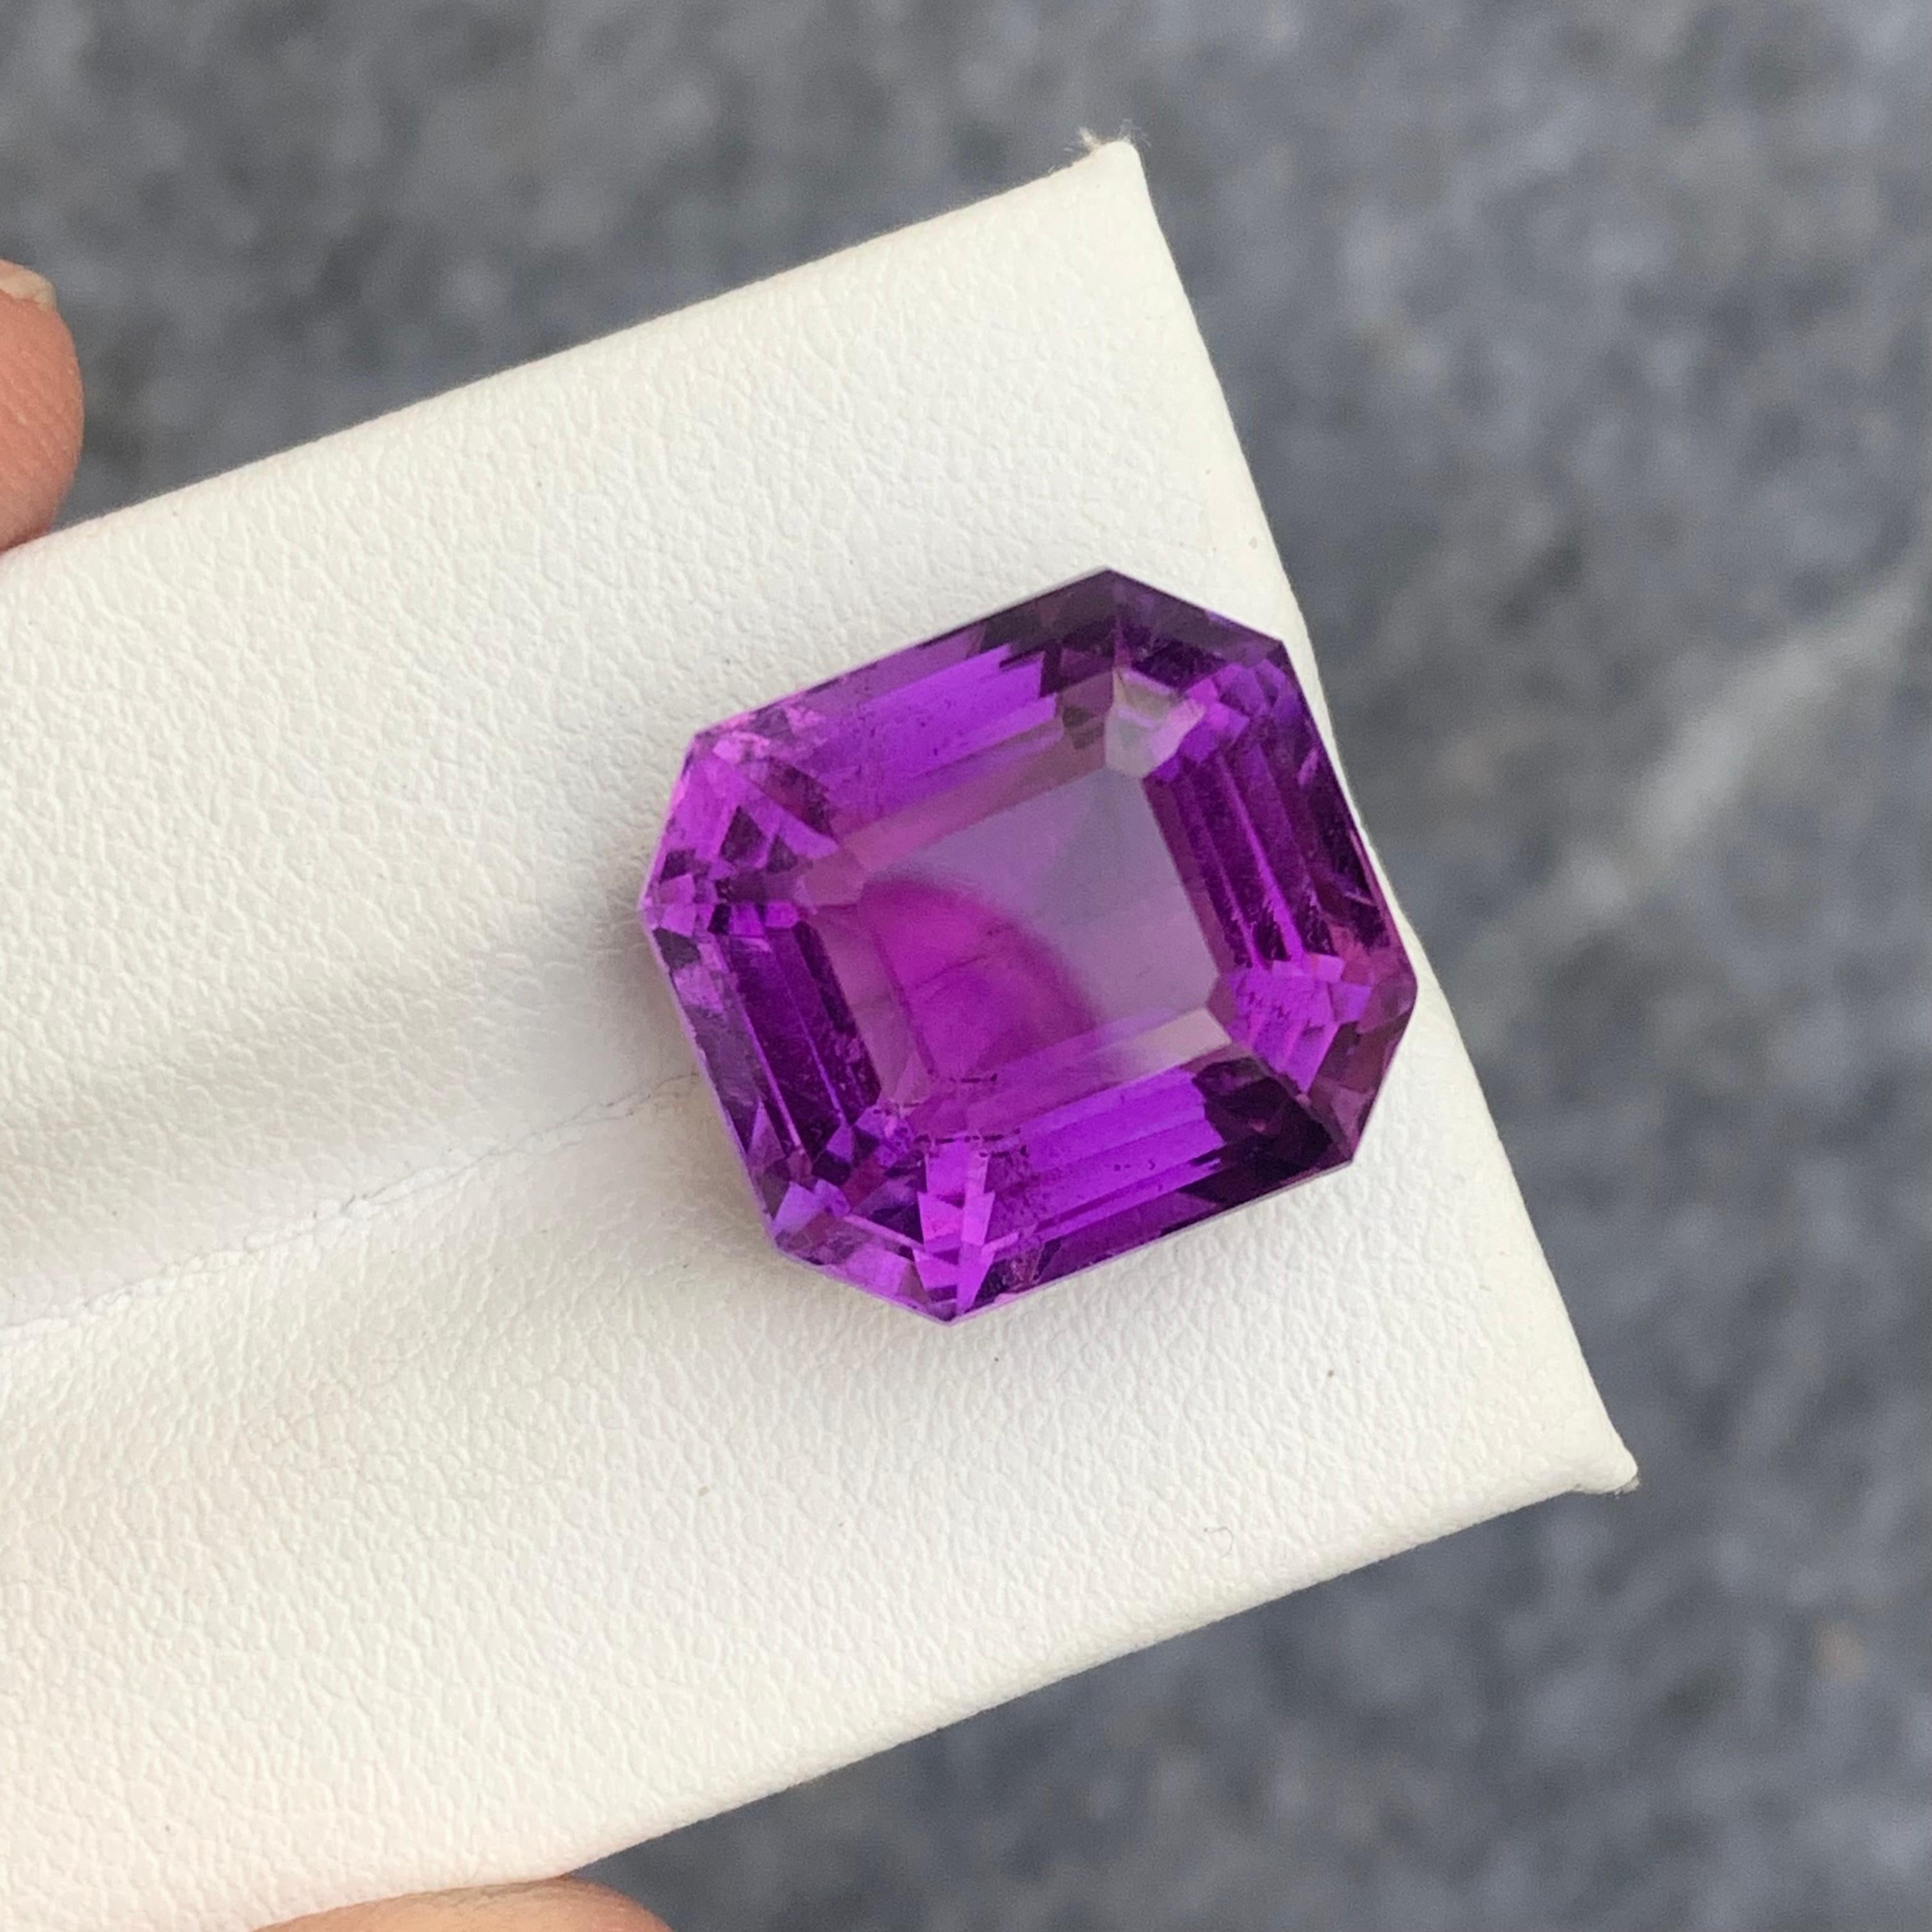 Octagon Cut Intense Dark Purple Loose Amethyst Octagon Shape 13.50 Carat For Jewelry Making For Sale